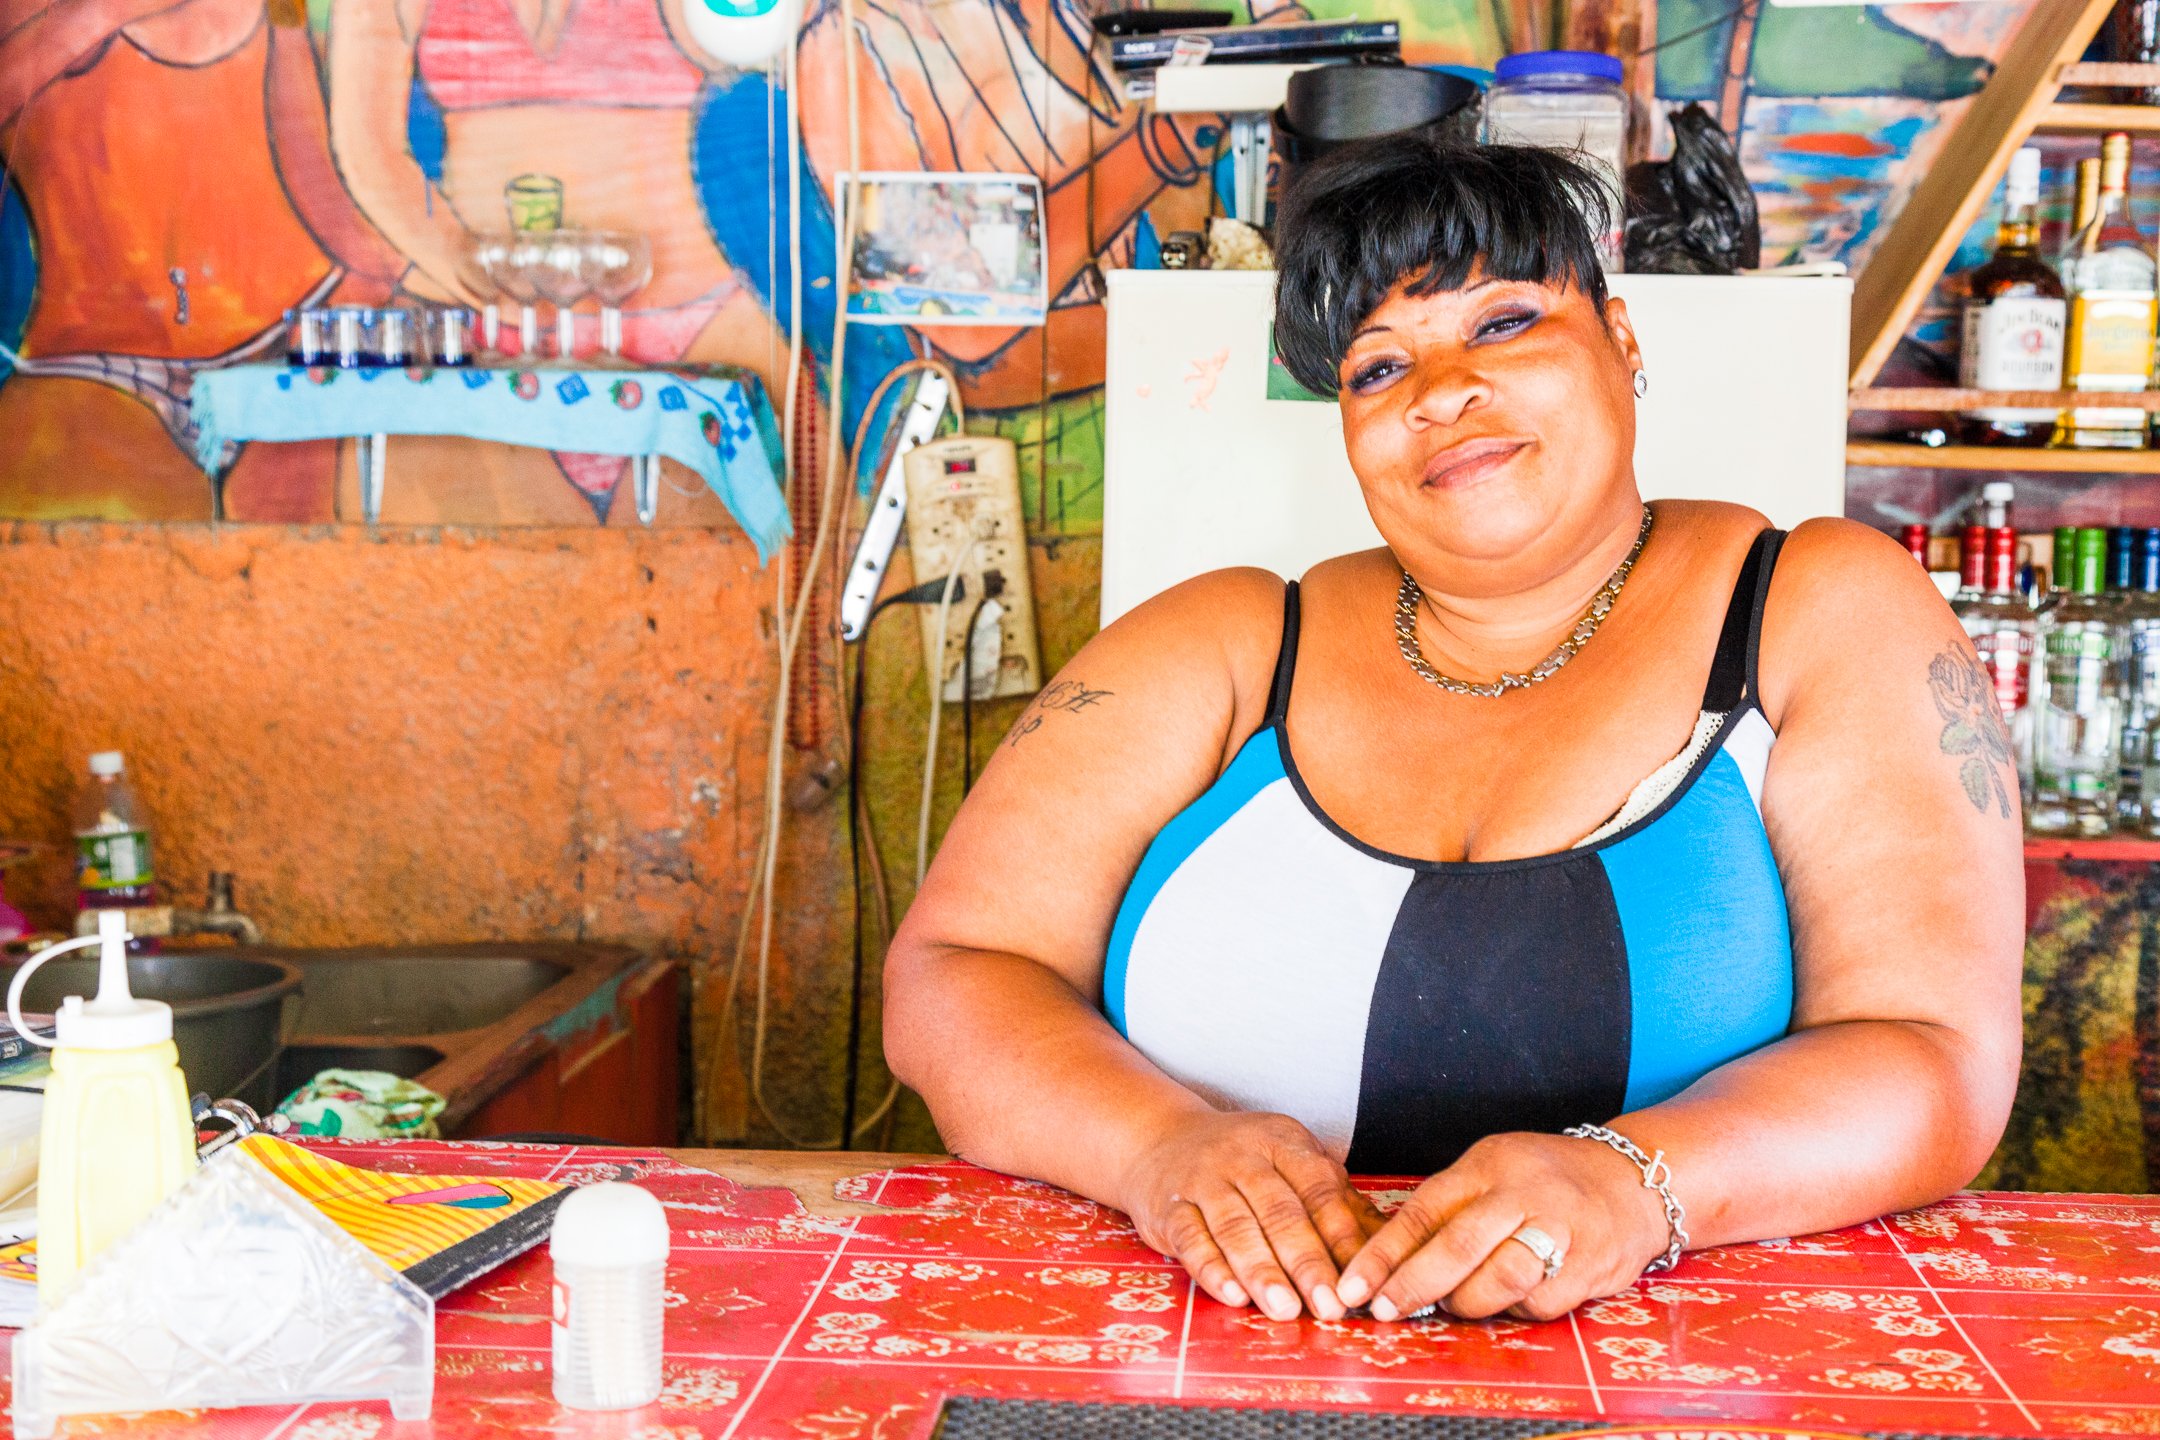  The waiter's smile, Negril, Jamaica 2014 ©Laura Elo 